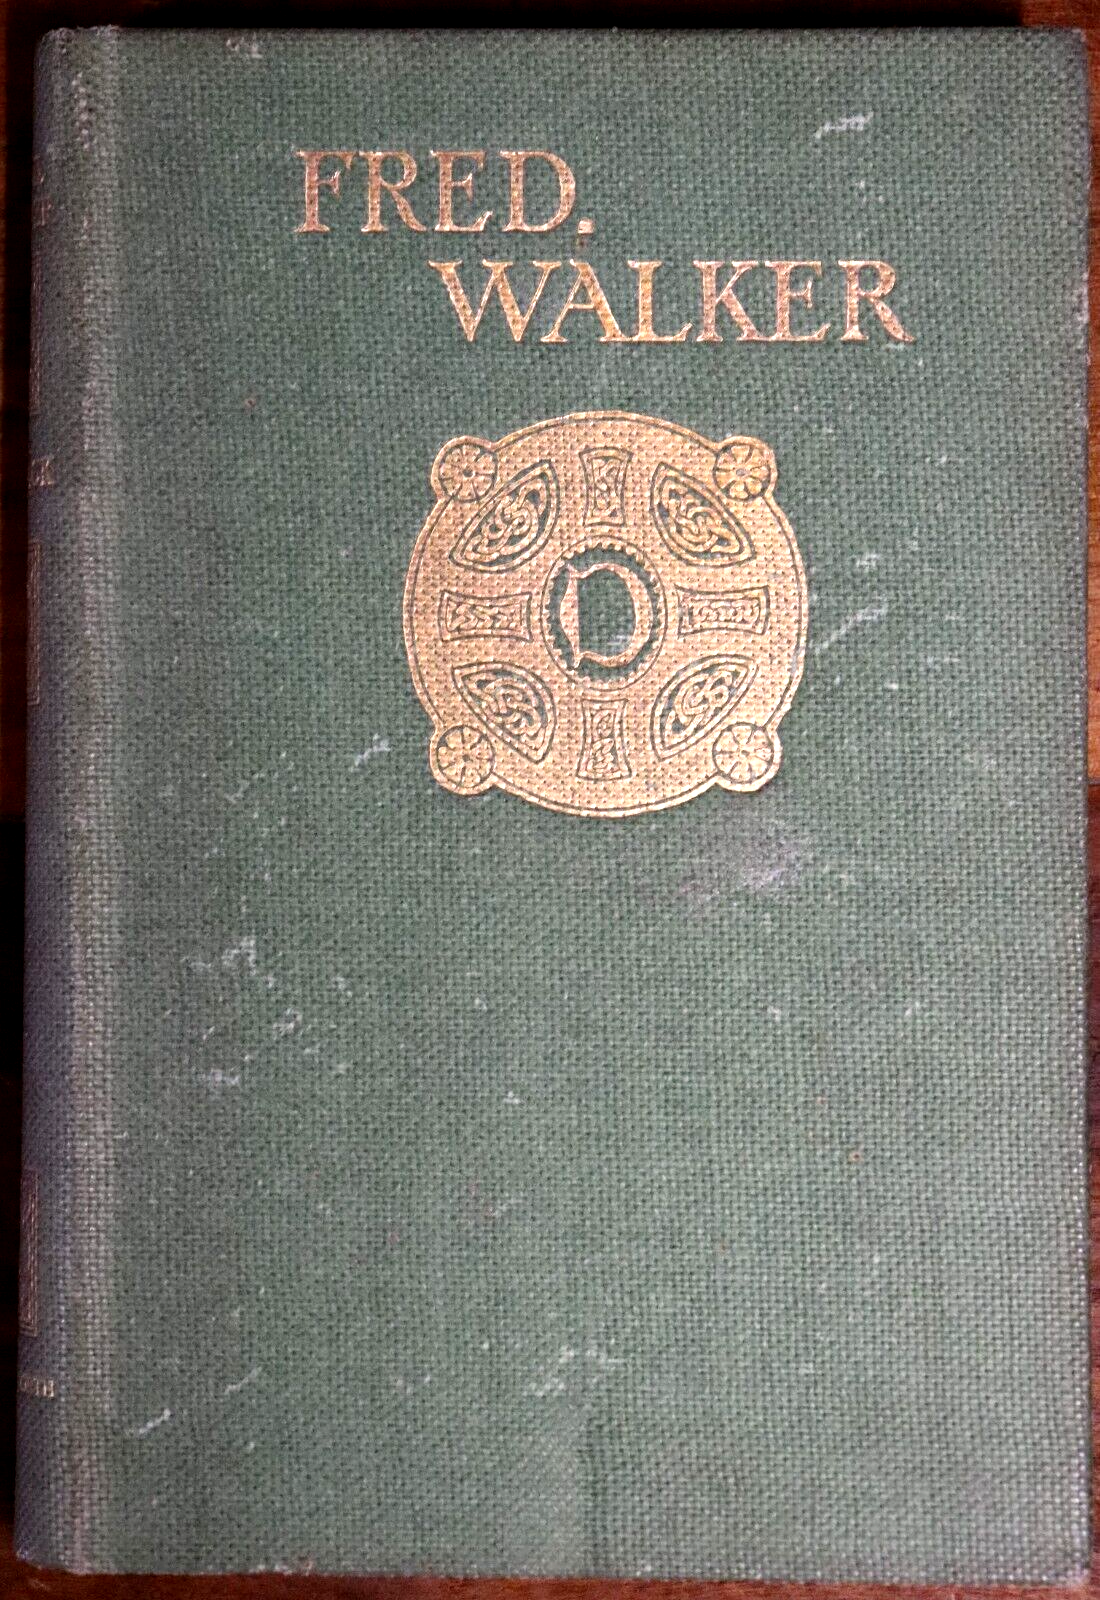 Fred Walker by Clementina Black - c1900 - Antique British Art Book